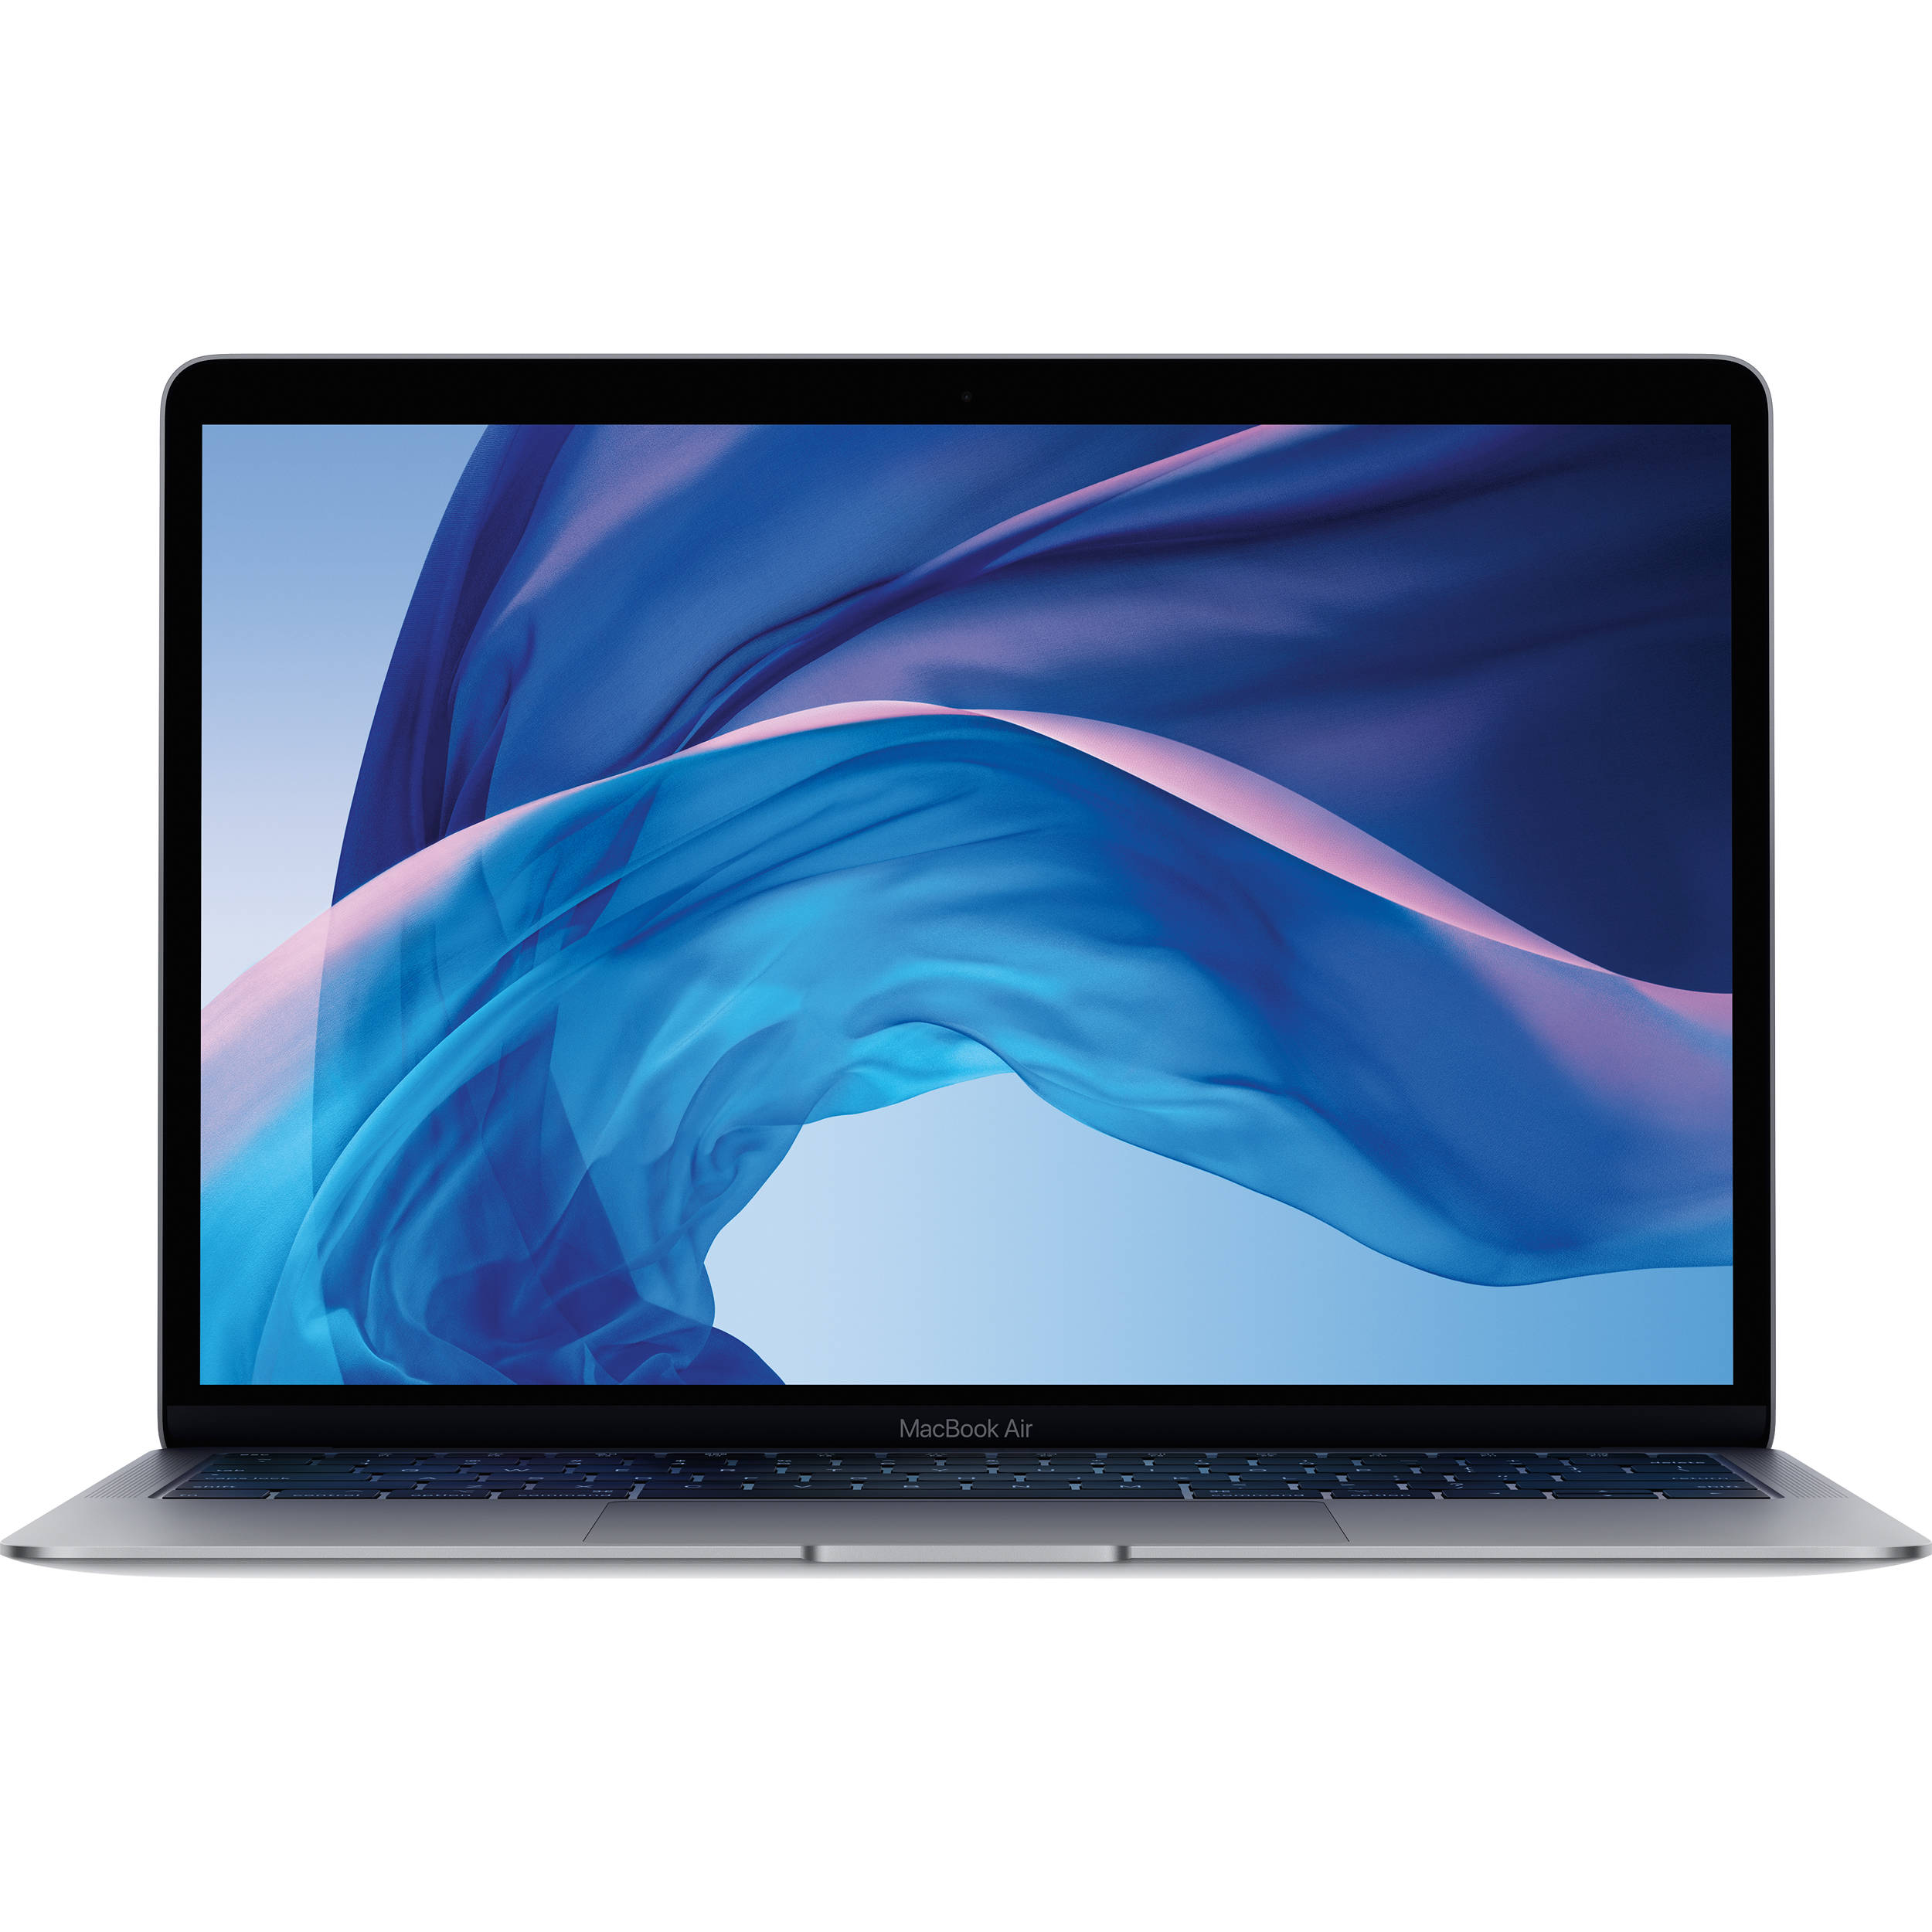 MacBook Air 2018 13.3inch core i5/Ram 8GB/SSD 128 GB/New 99% (Gray/Silver/Gold)